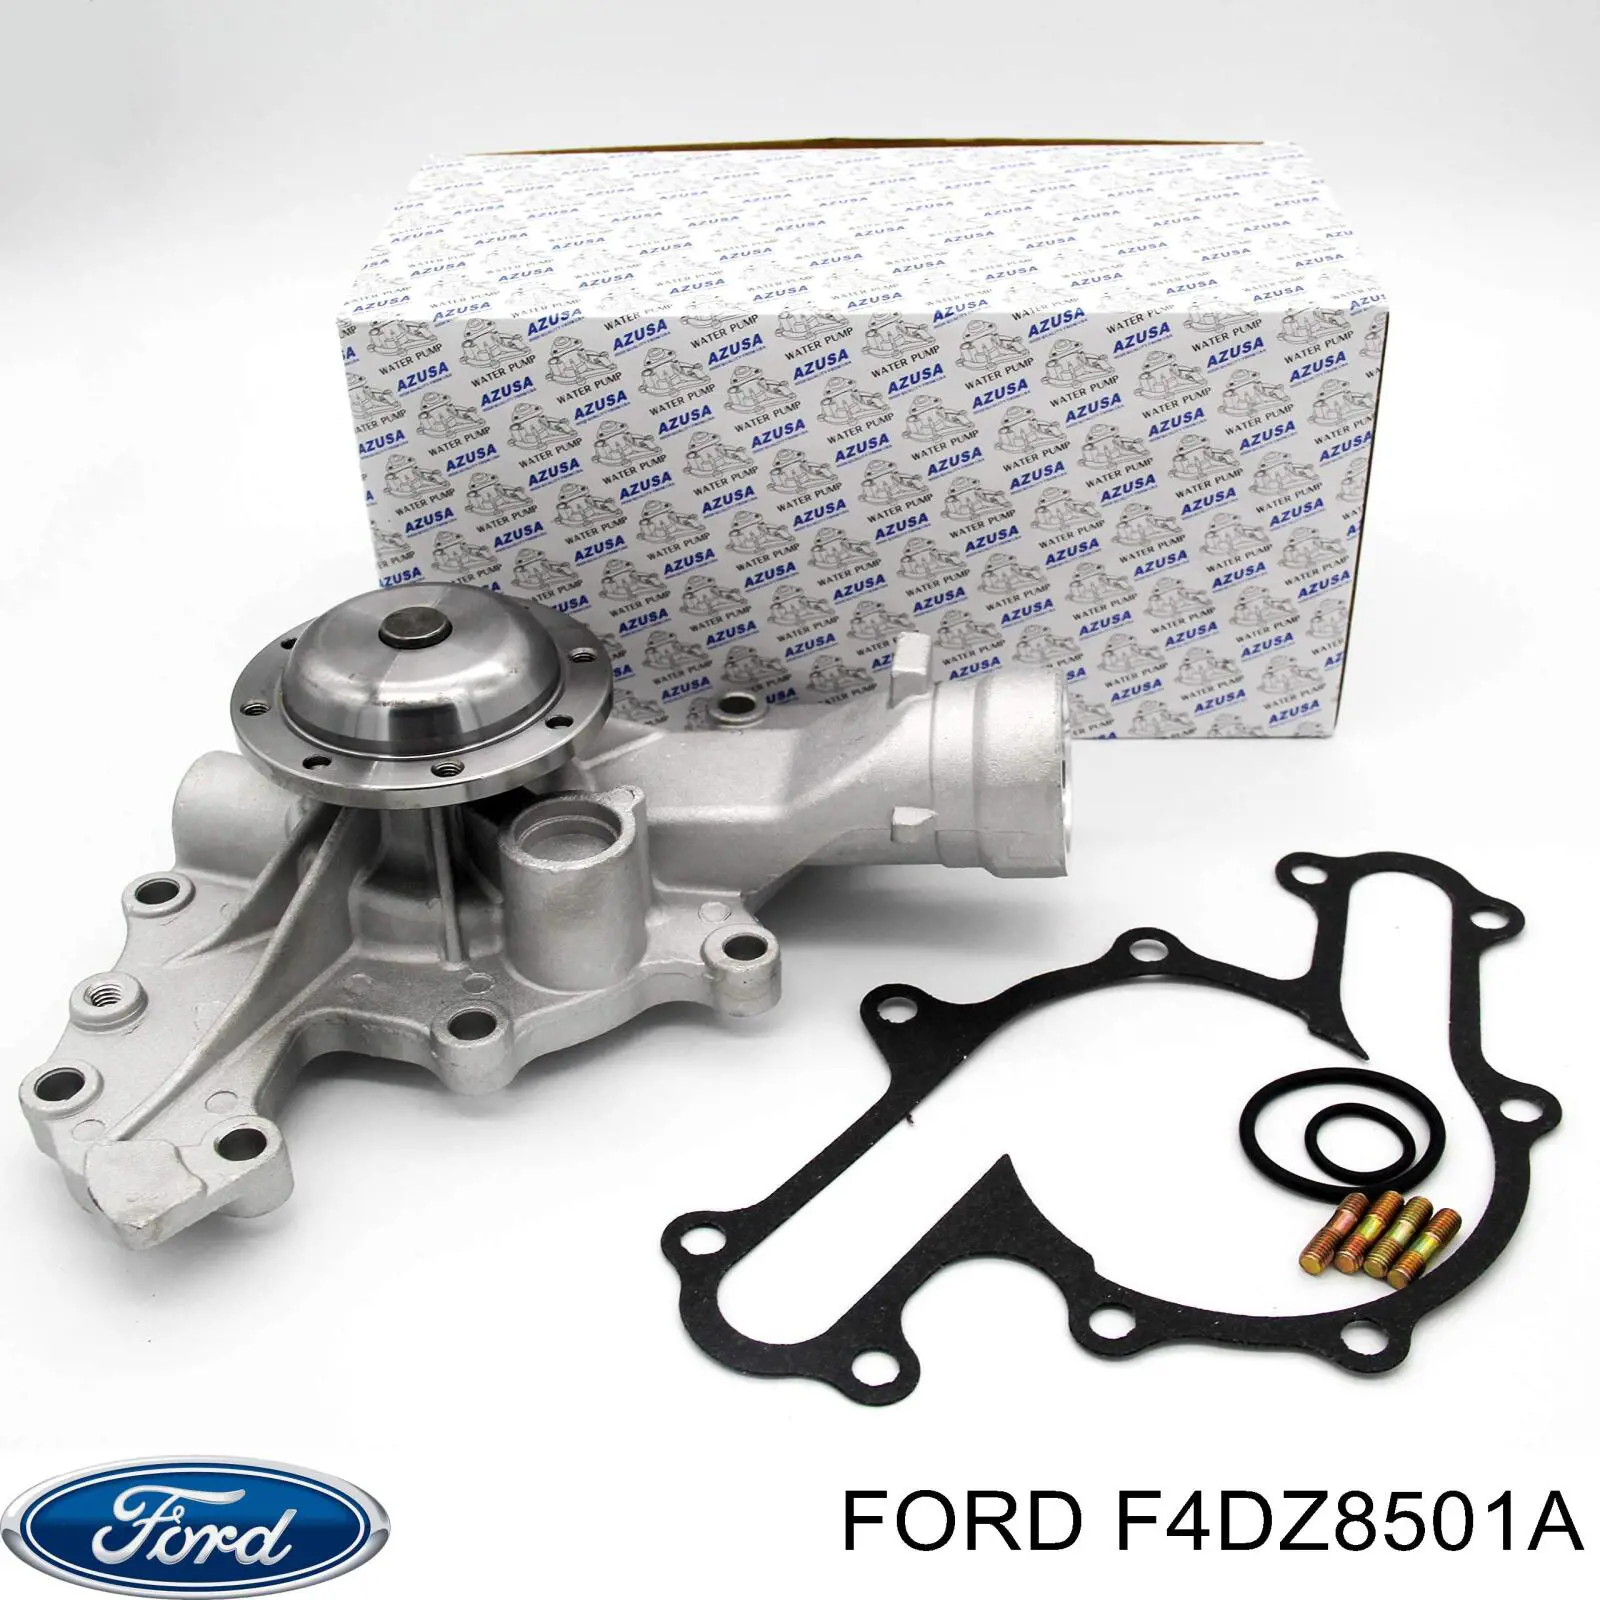 Помпа водяная (насос) охлаждения на Ford Taurus GL 